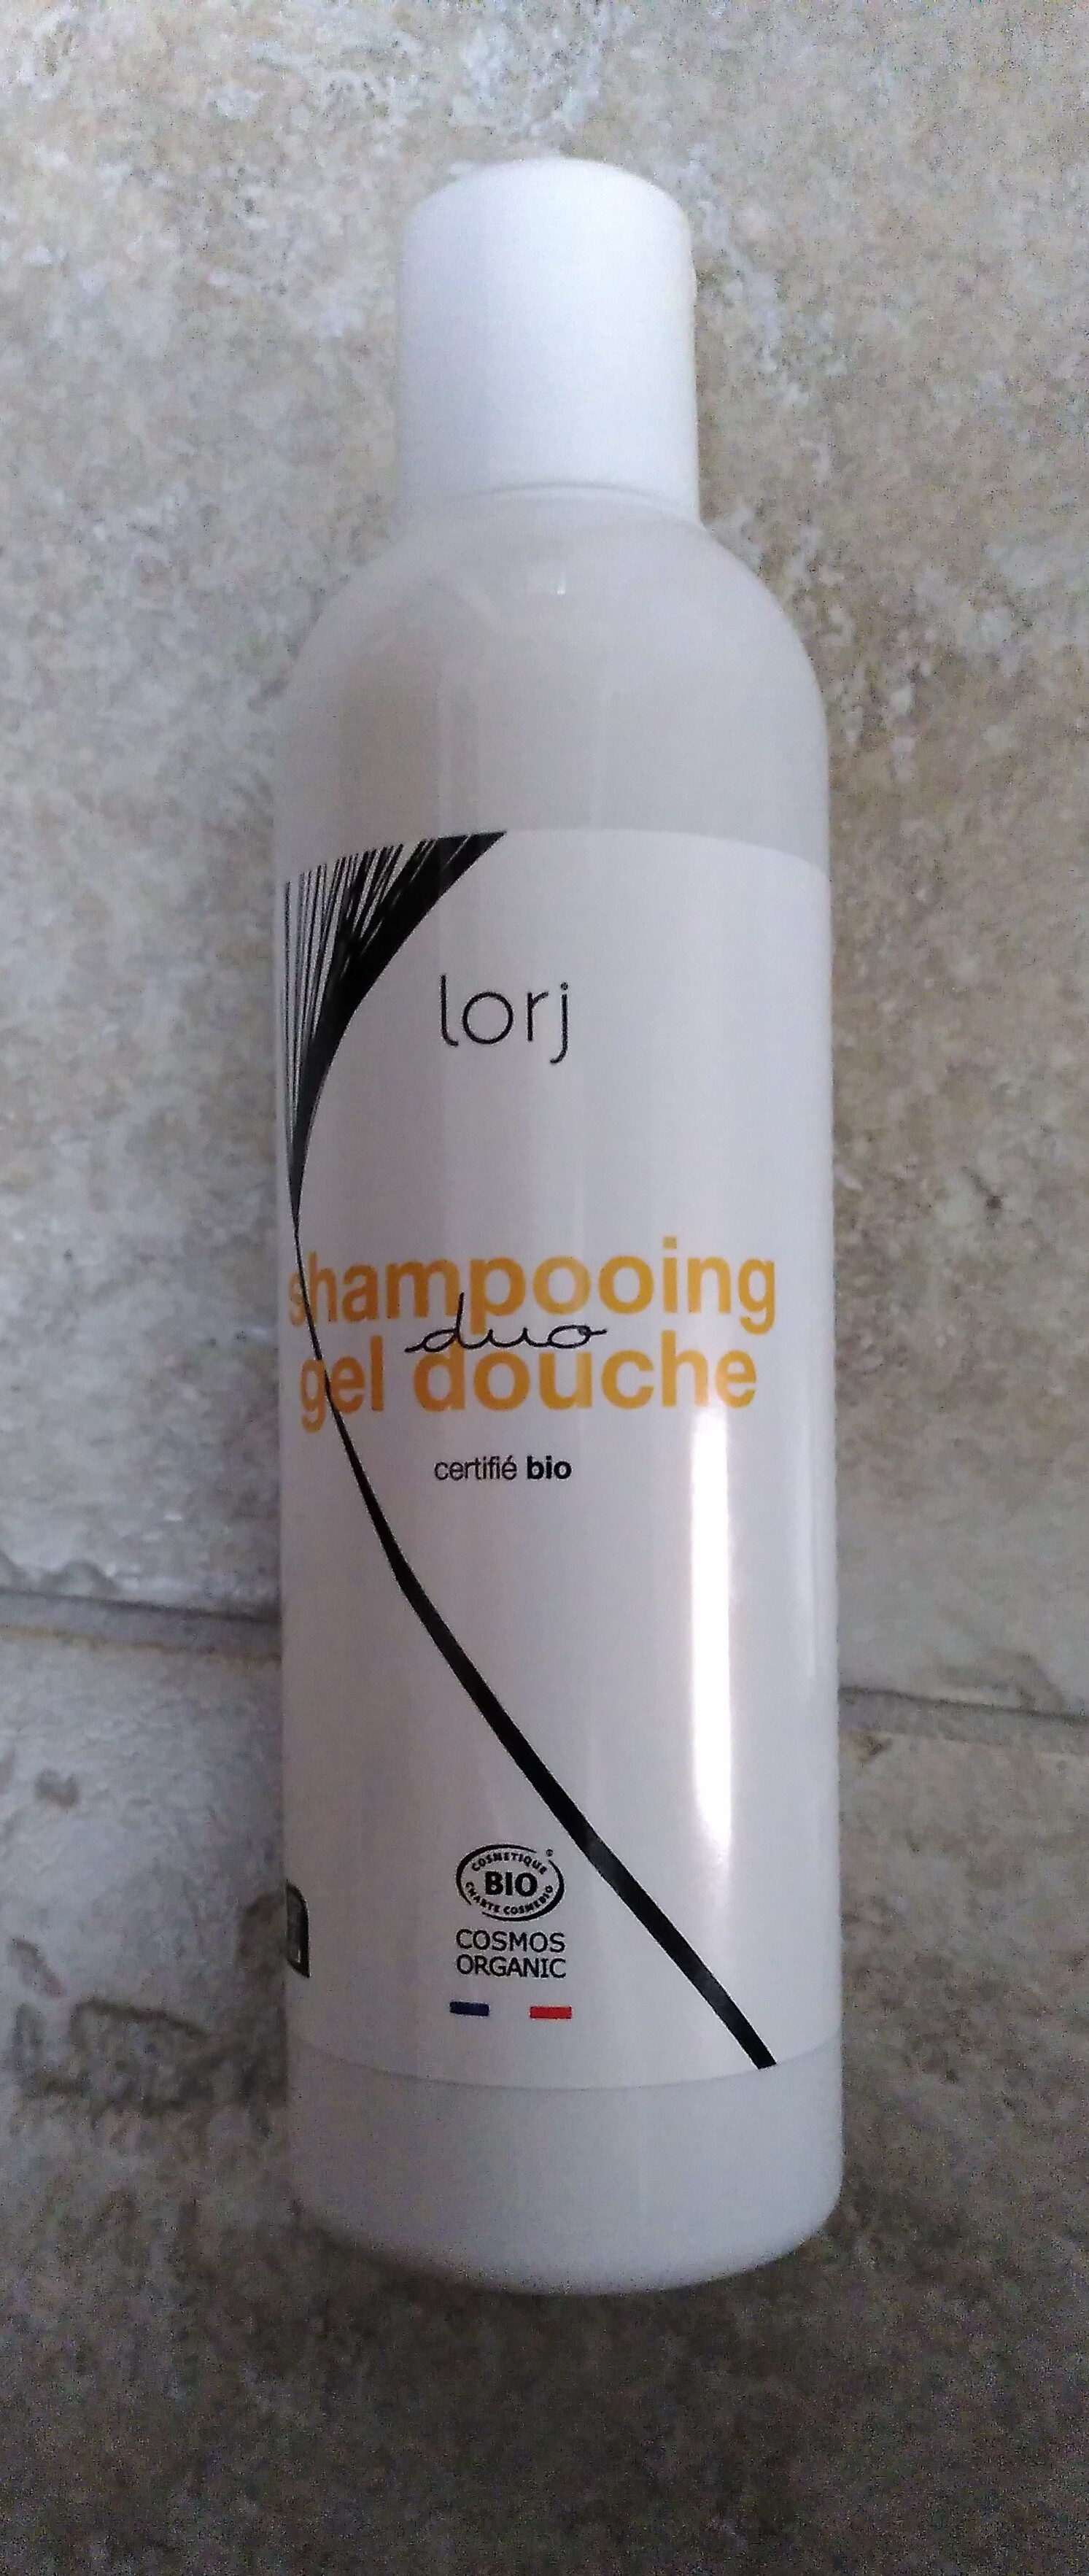 Duo shampoing gel douche - מוצר - fr